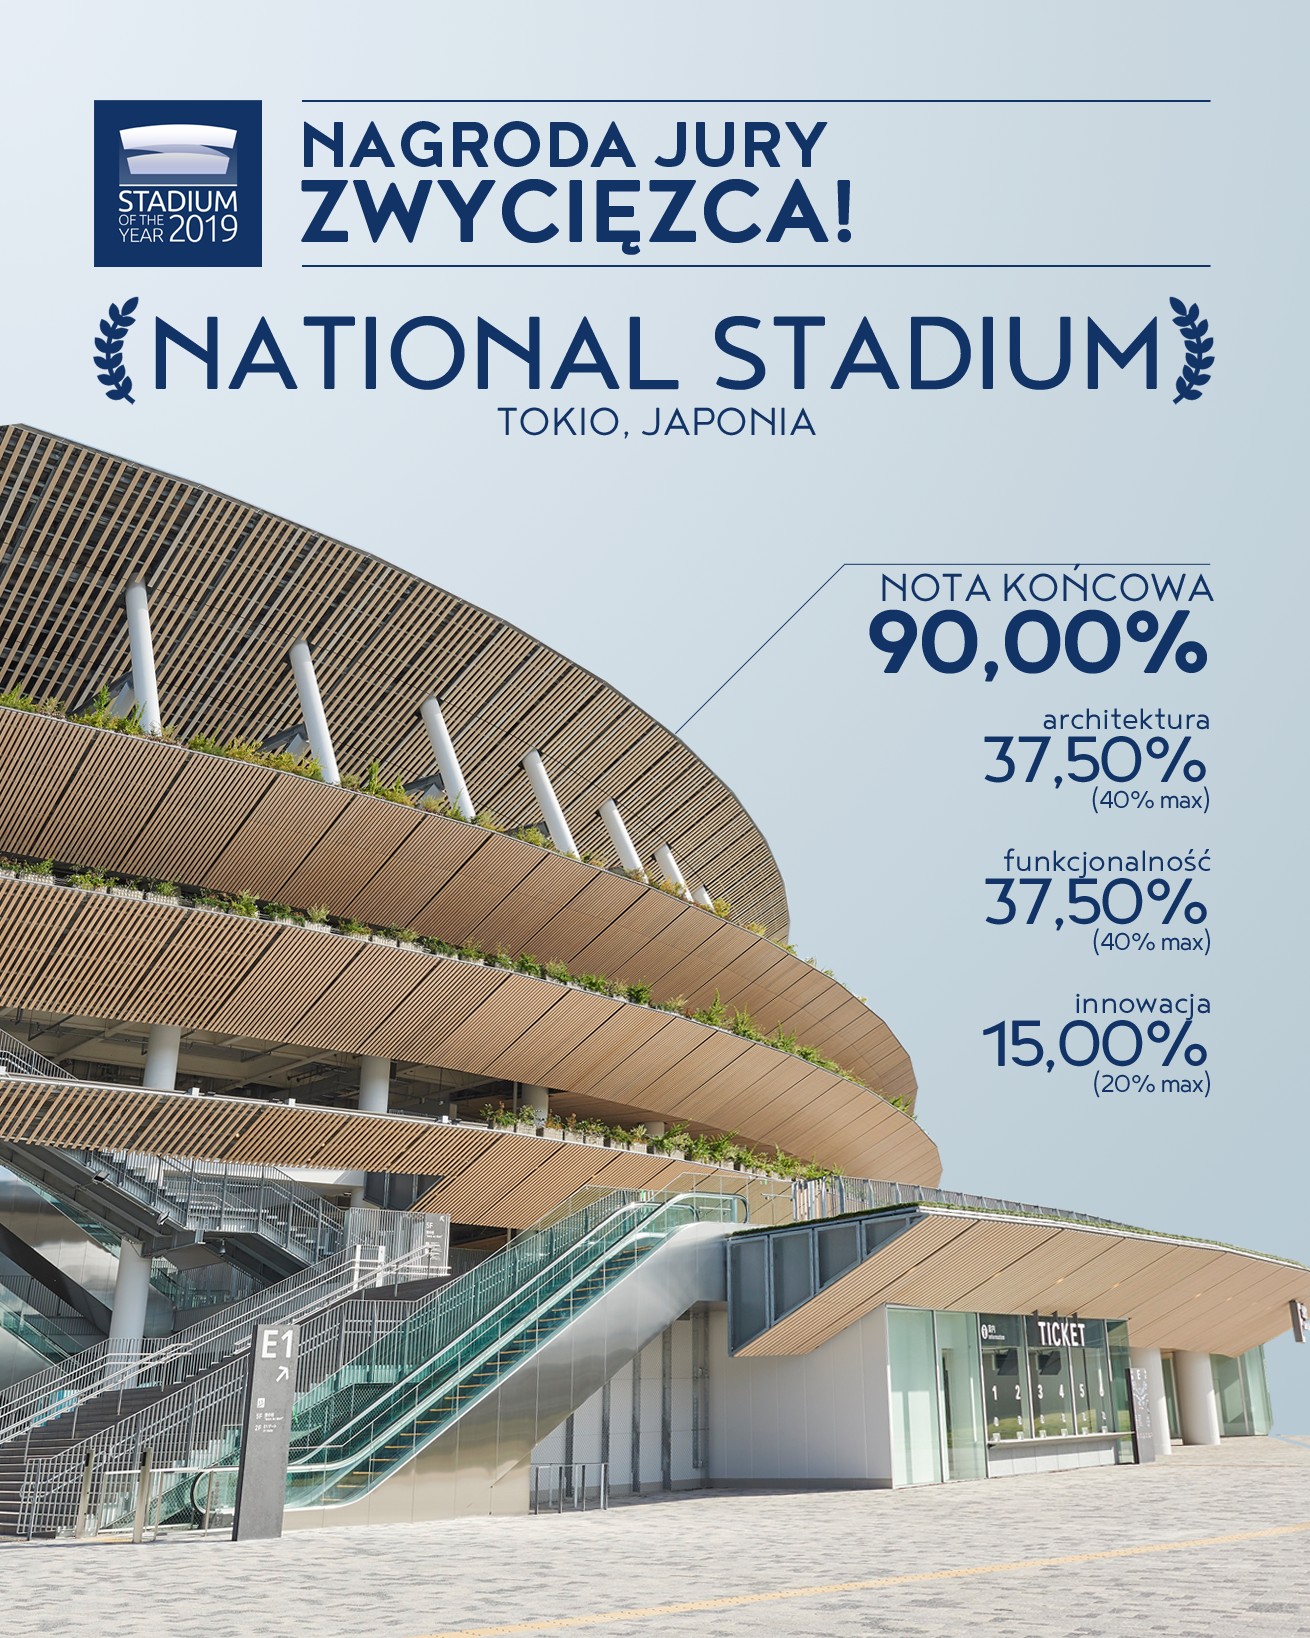 Stadium of the Year 2019